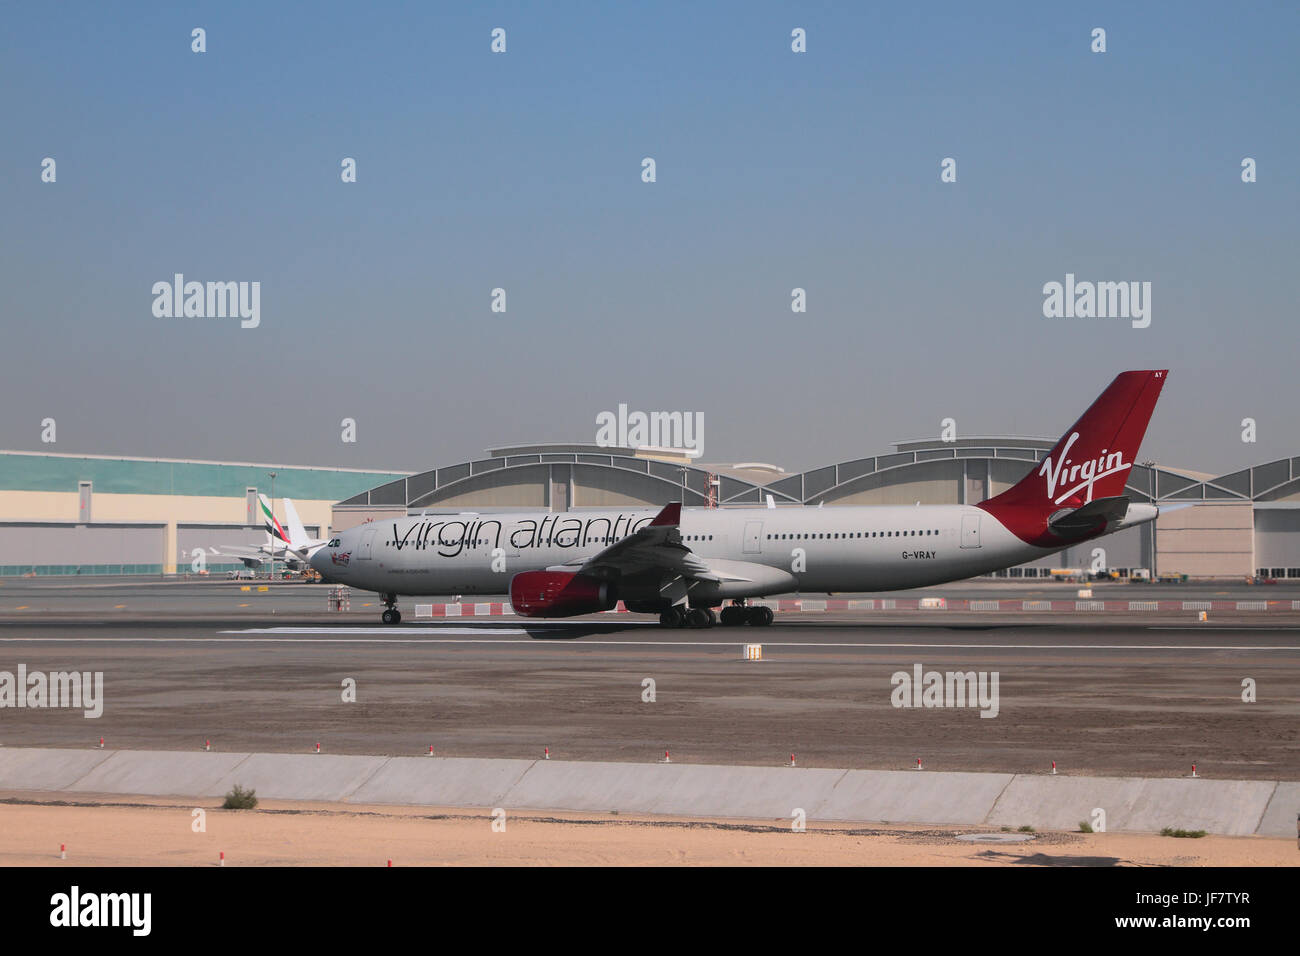 Dubai, UAE - Plane of Virgin atlantic company (G-VRAY, Airbus A330-300) at airport. Stock Photo